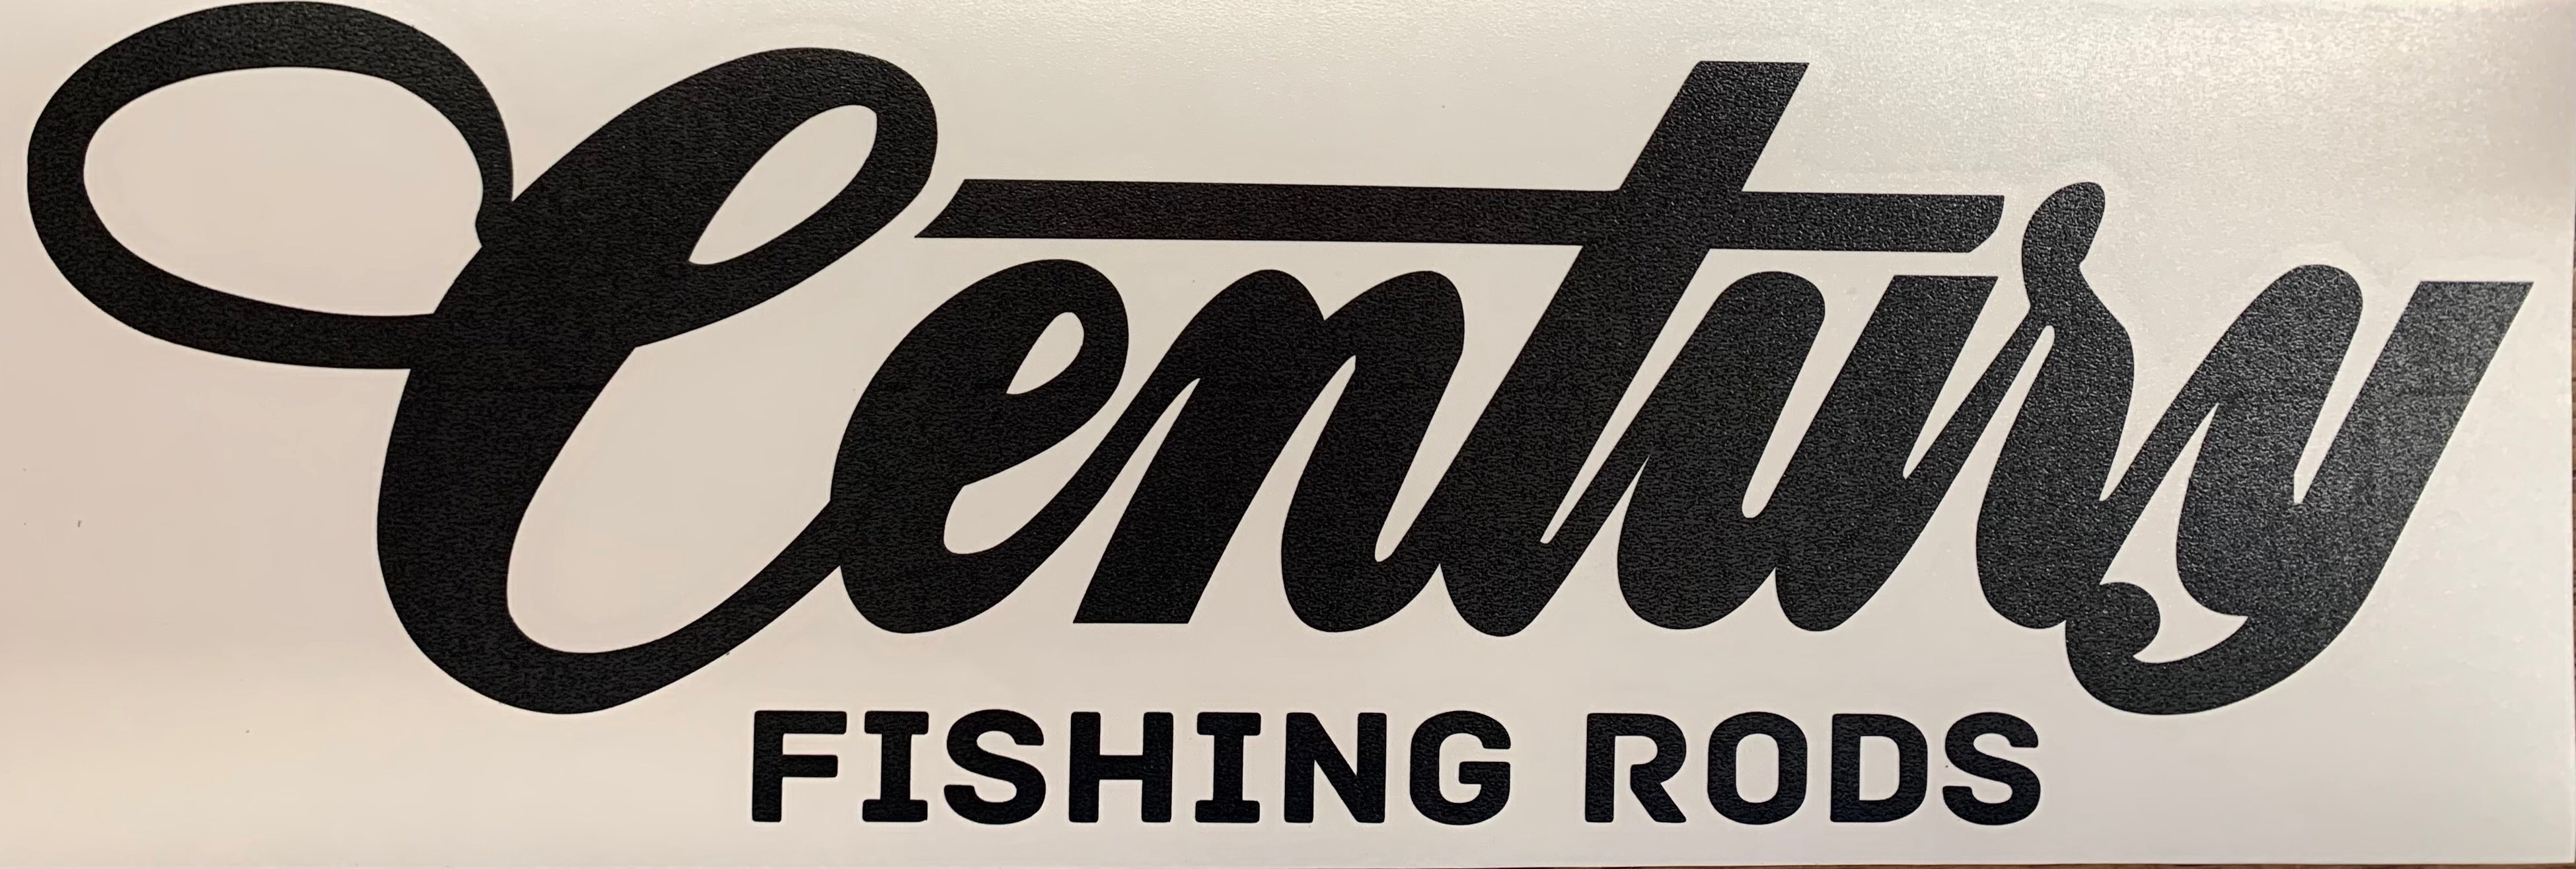 Cutting sticker brand Fishing Rod series